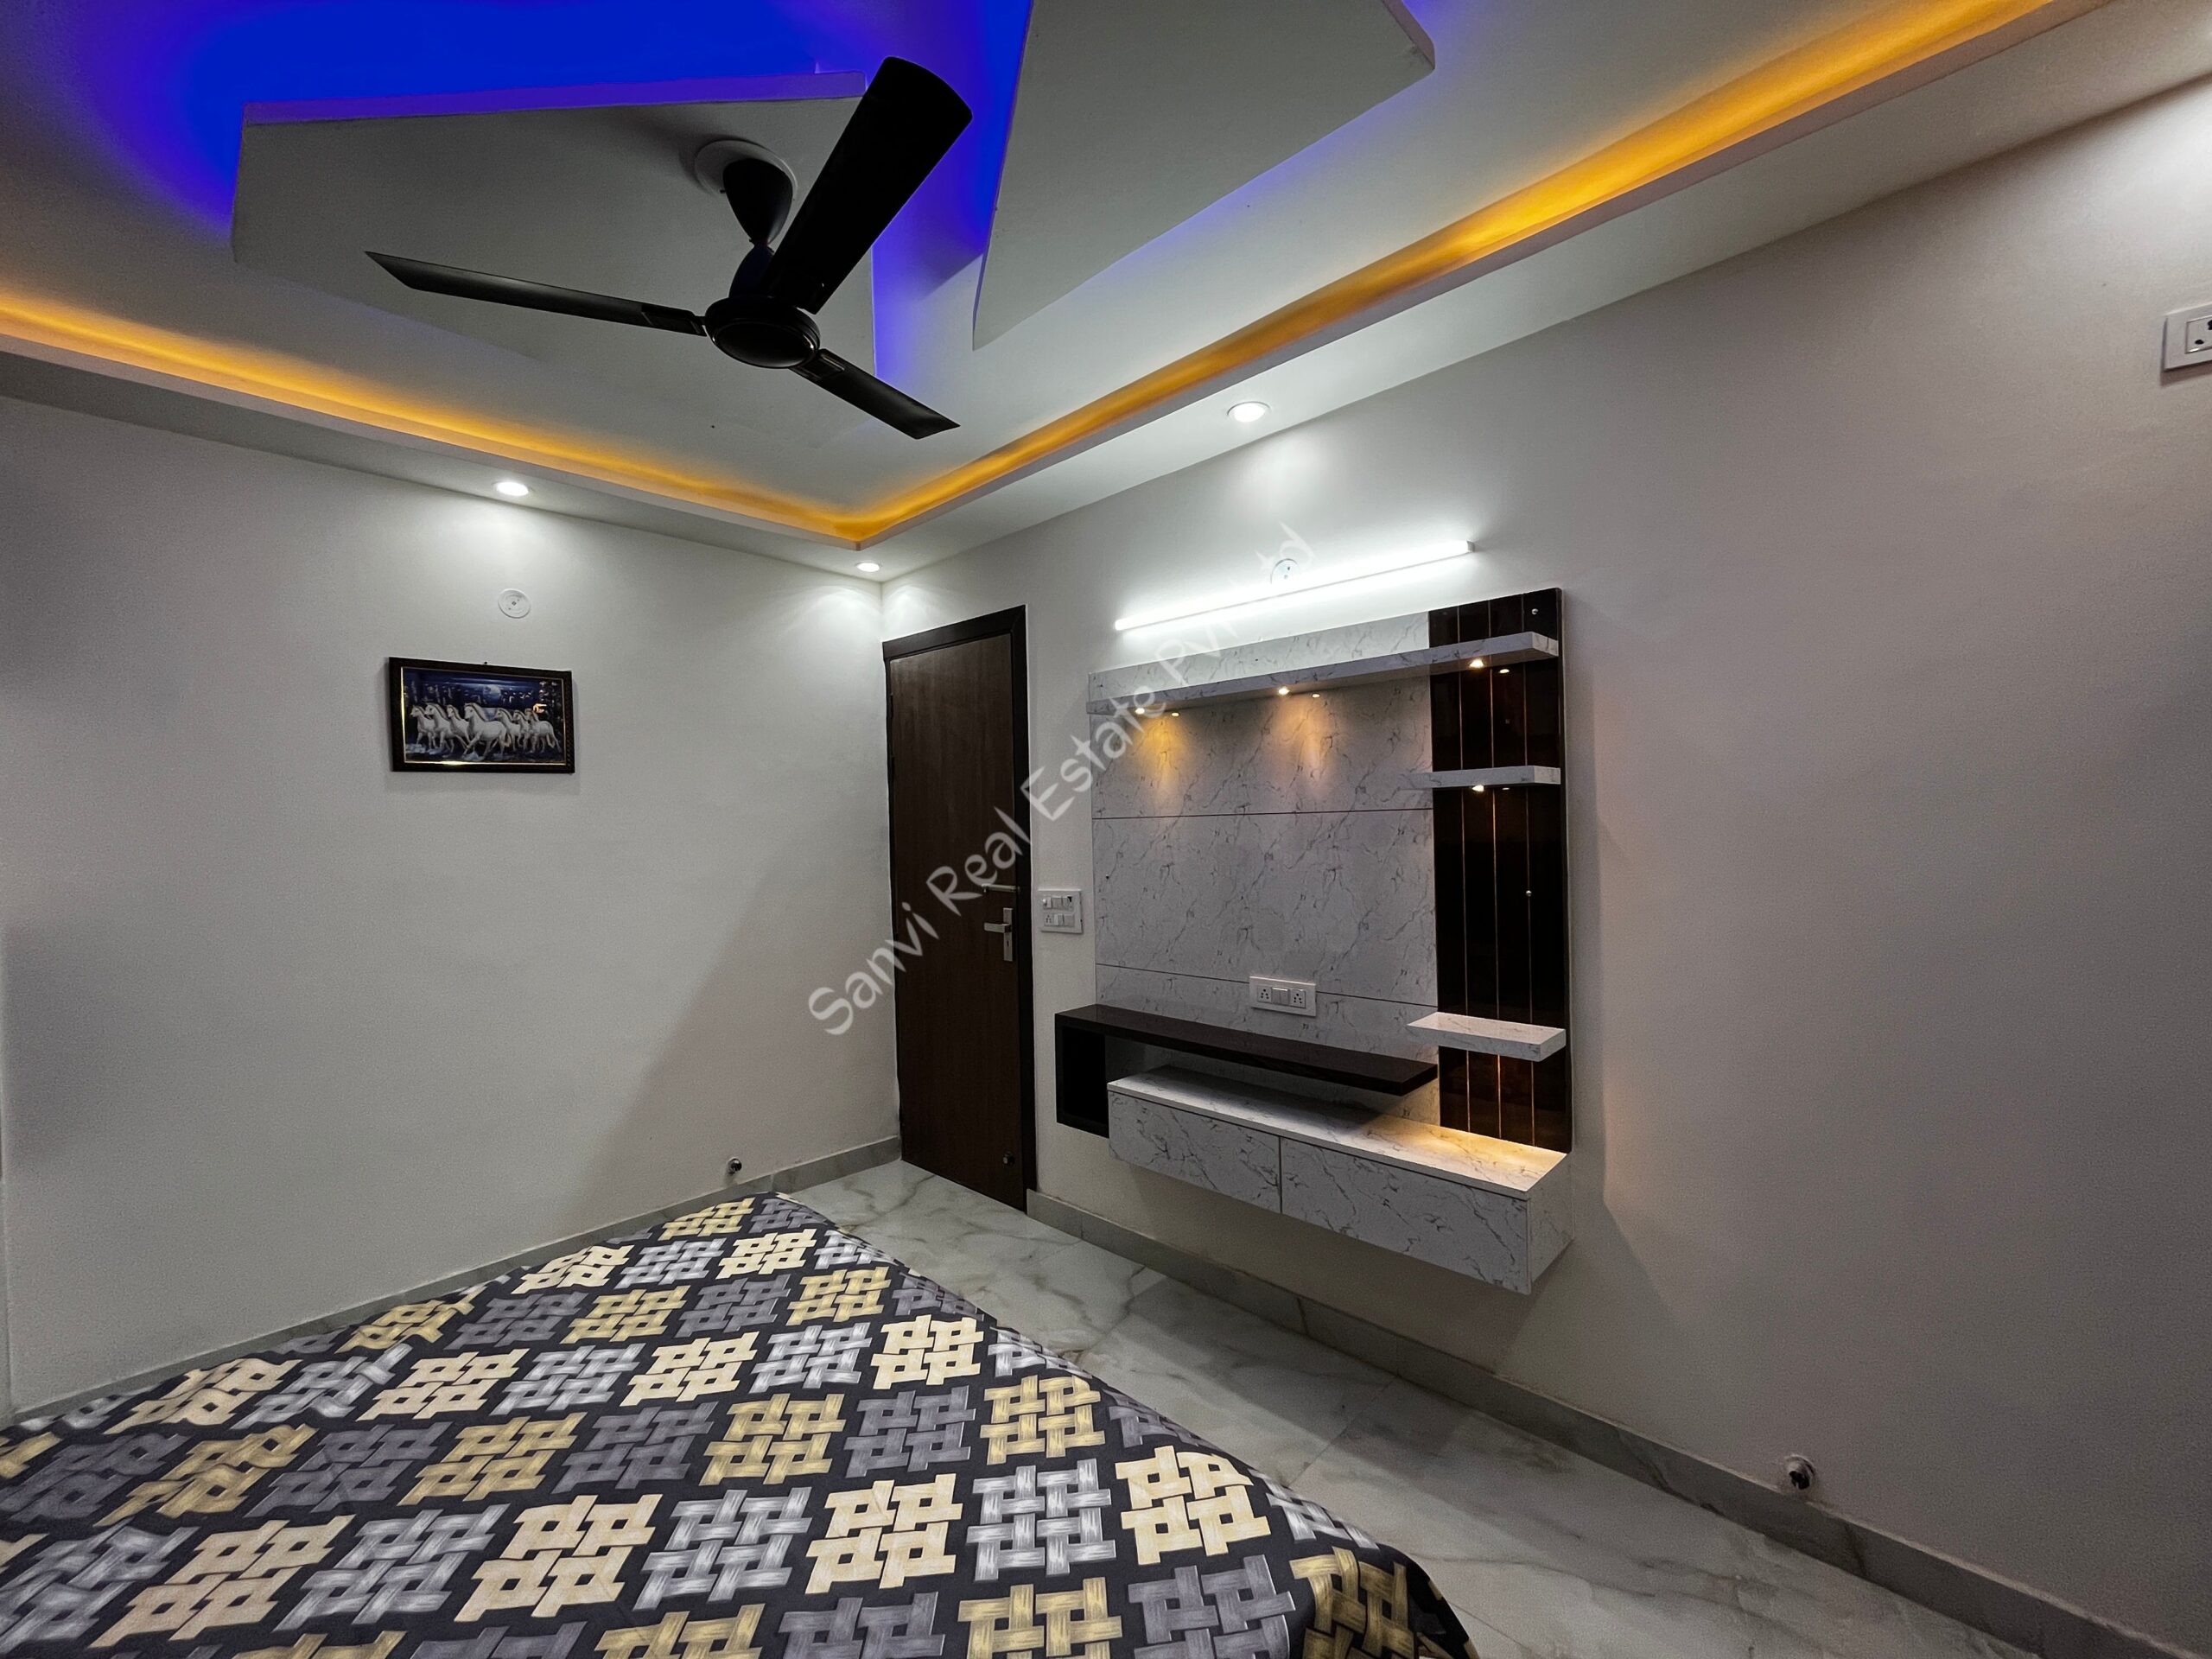 3 BHK Apartment in Dwarka Mor, Delhi | Sanvi Real Estate